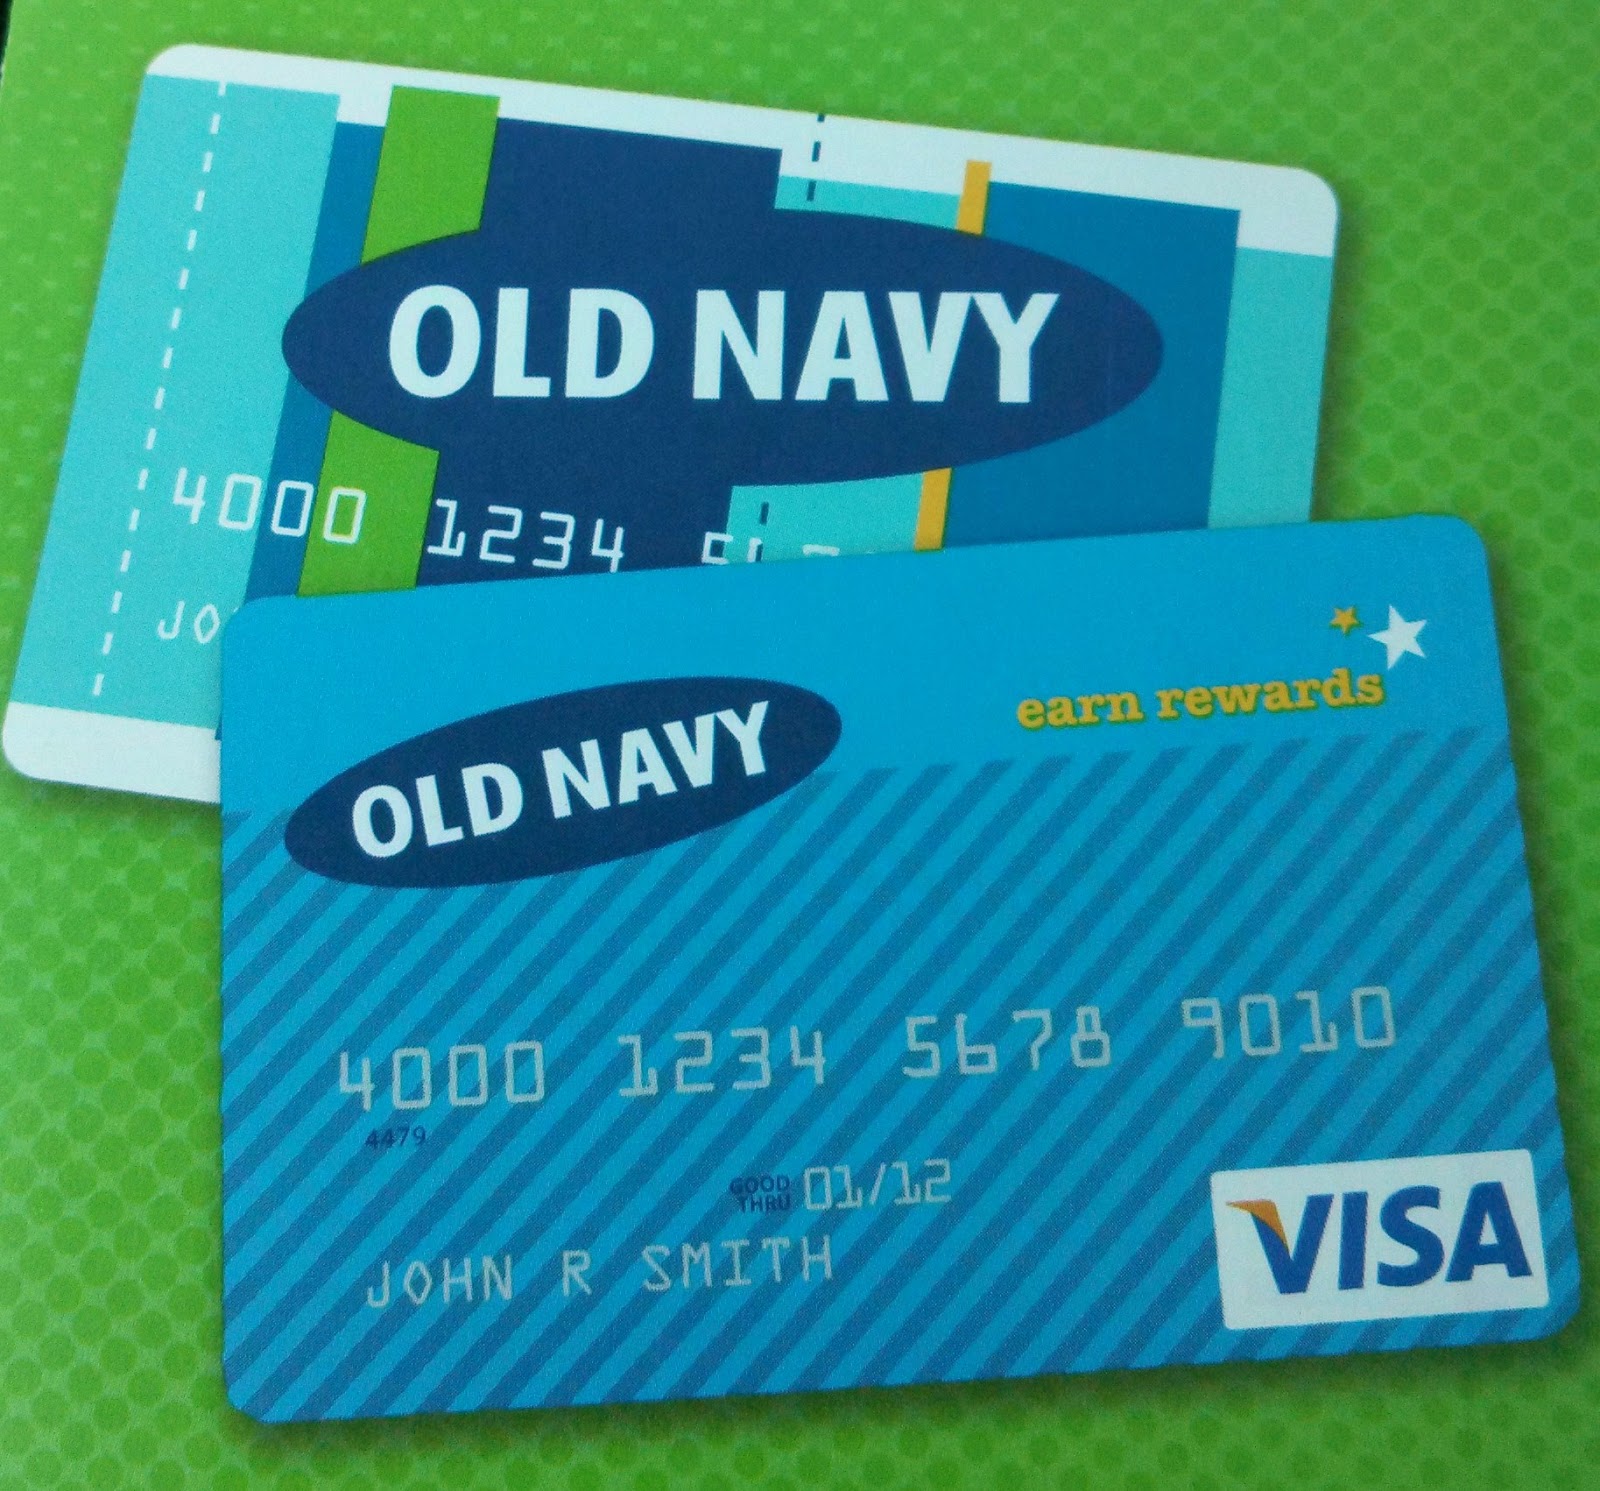 Old Navy Card and Old Navy Visa